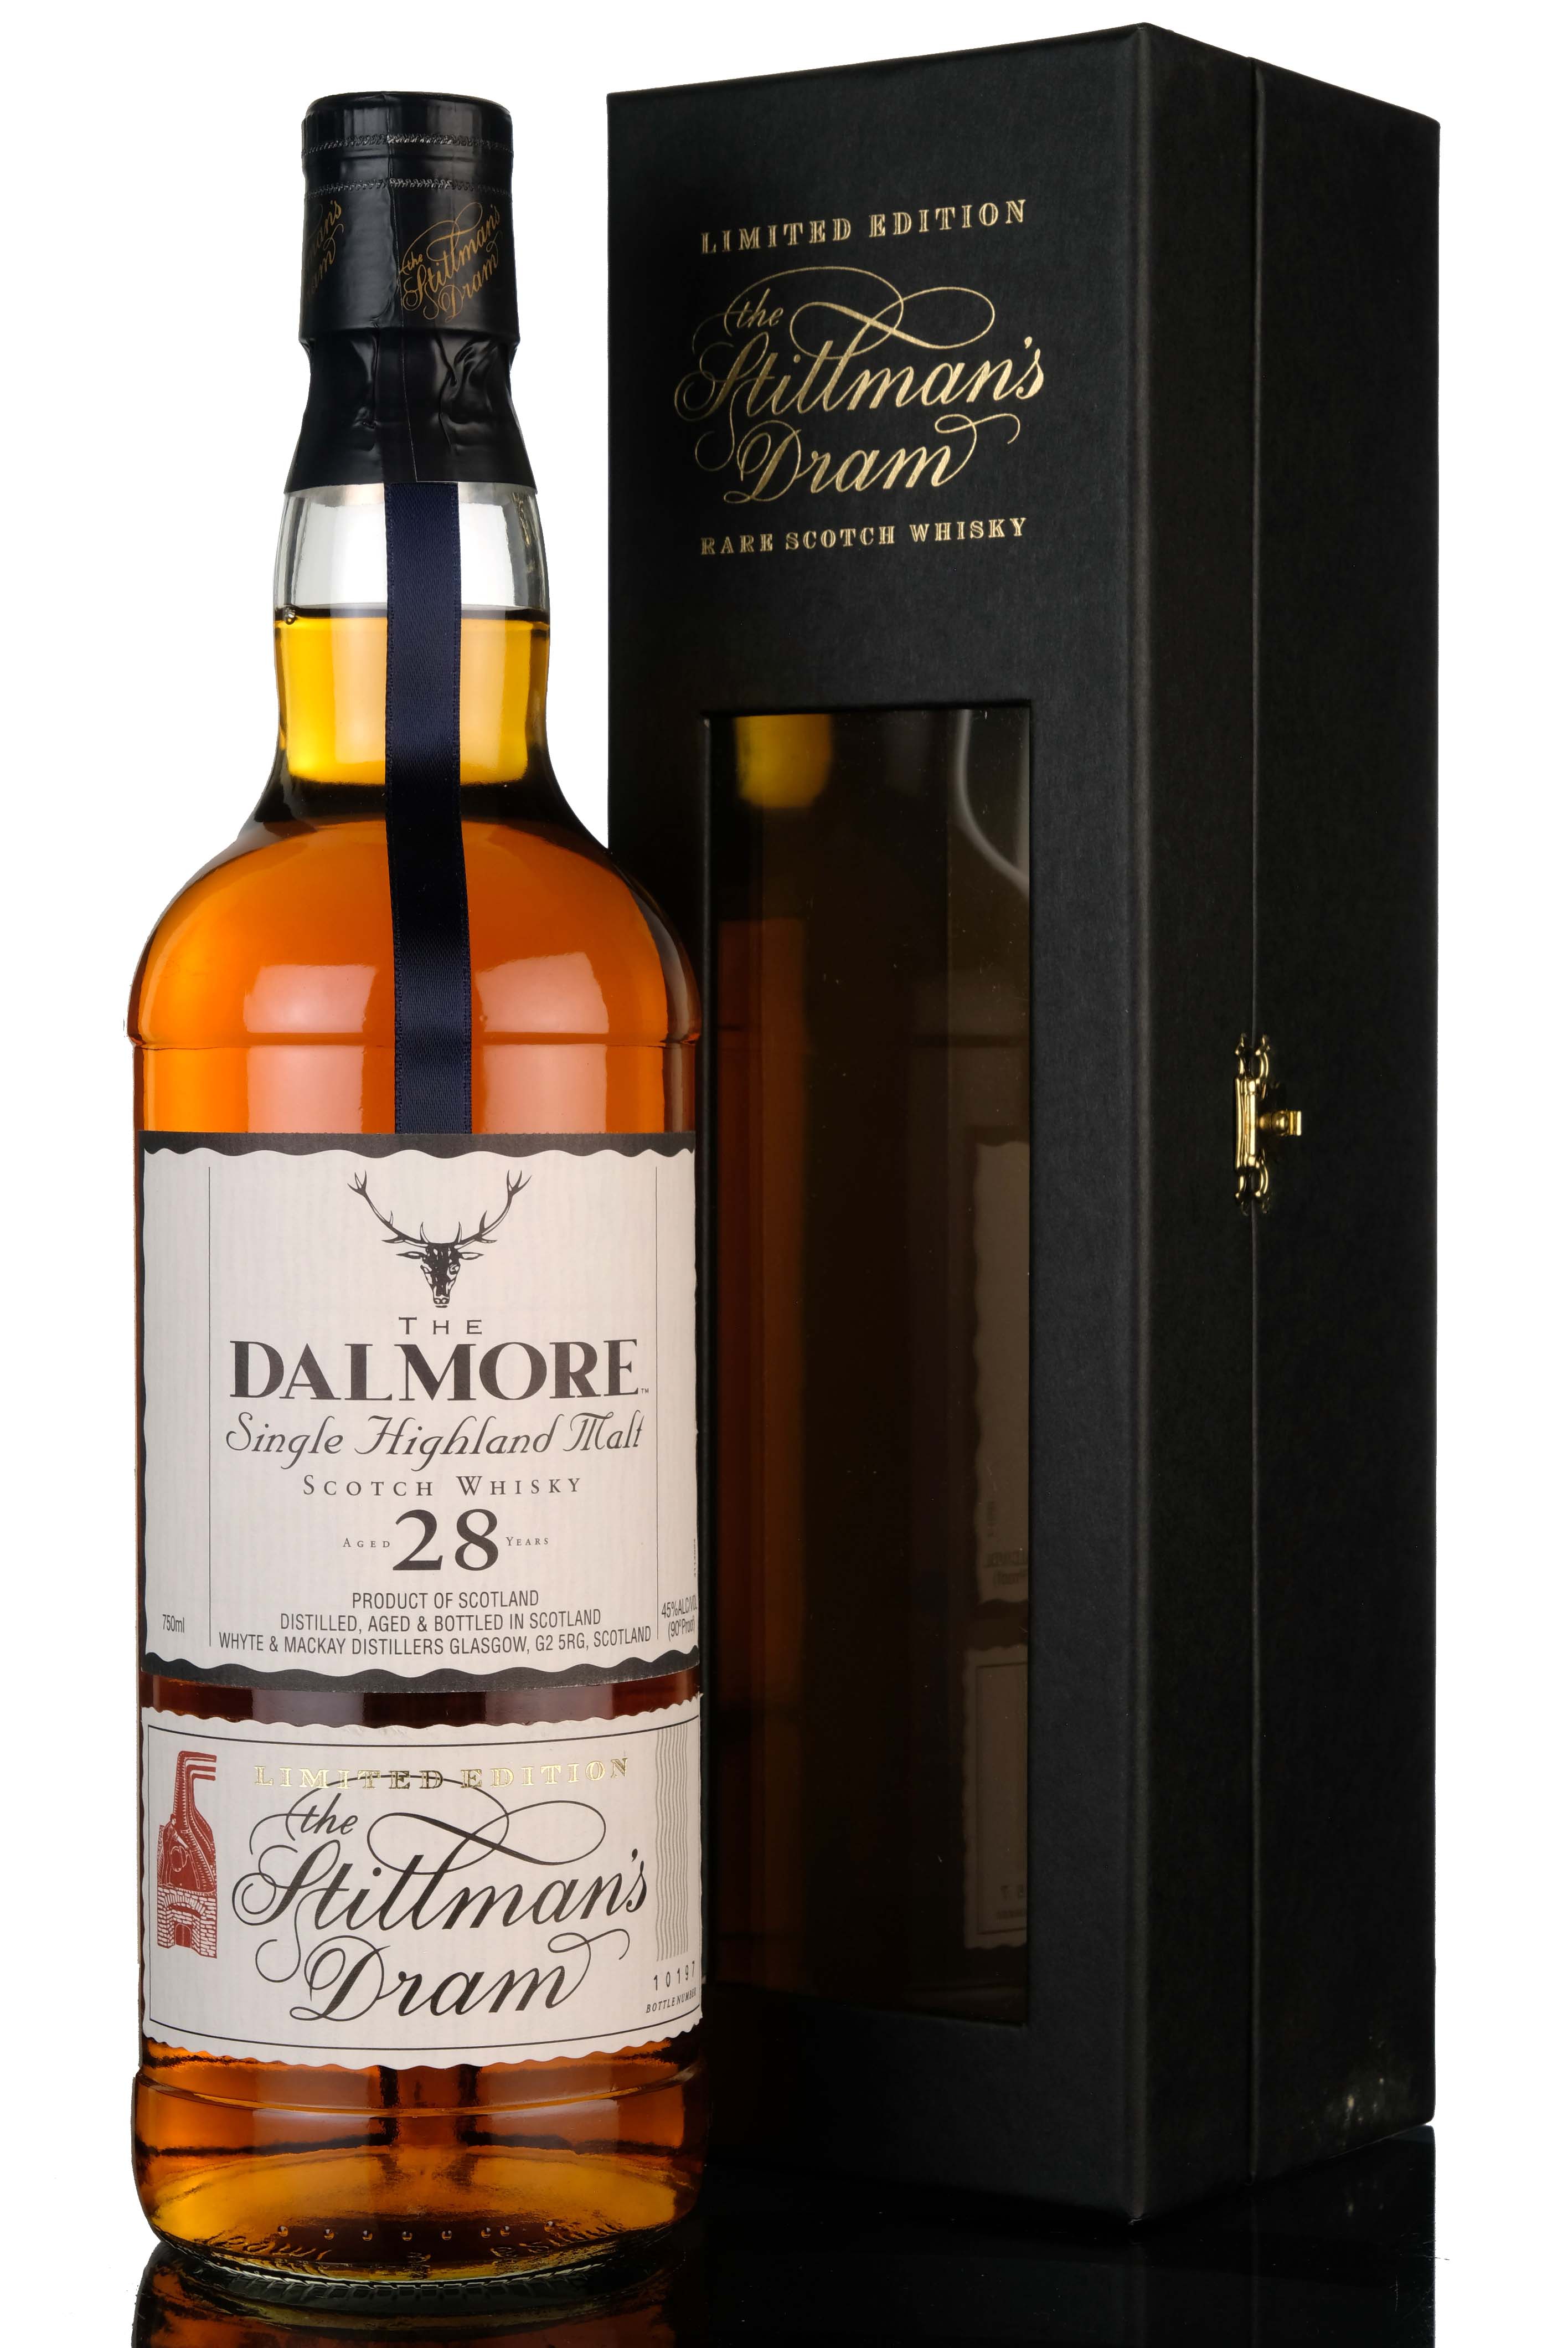 Dalmore 28 Year Old - Stillmans Dram